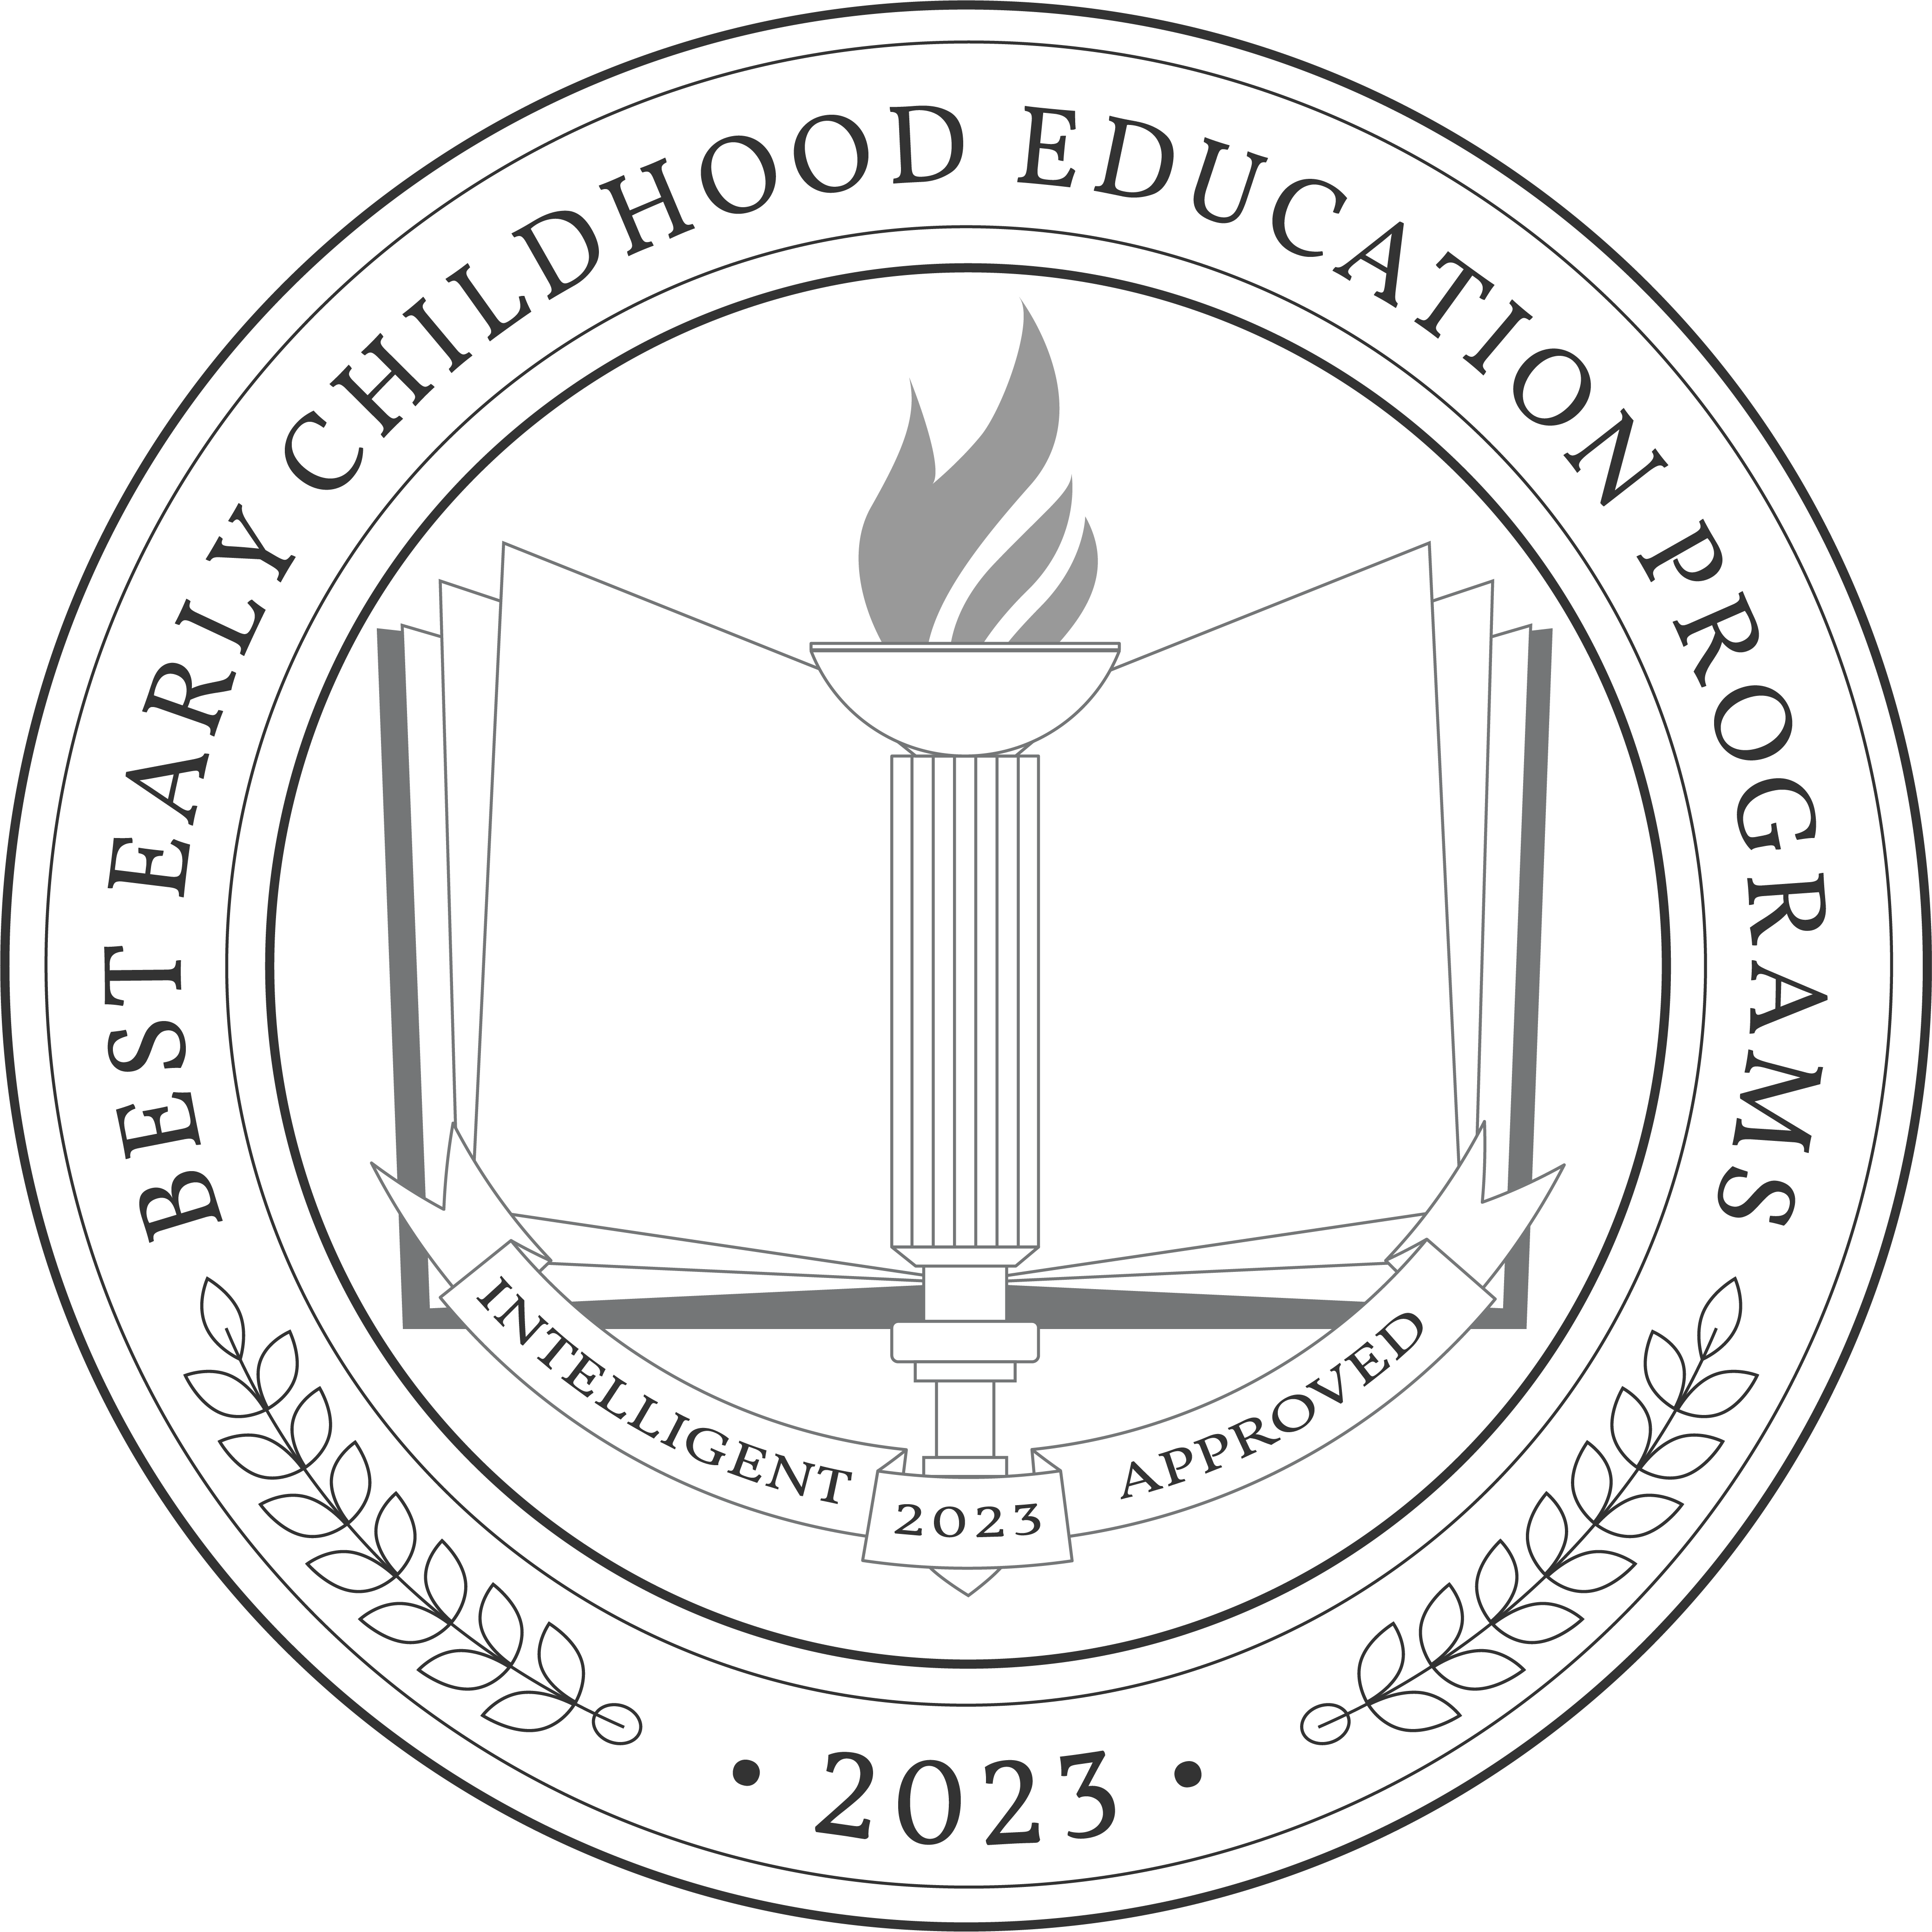 Best Early Childhood Education Programs badge